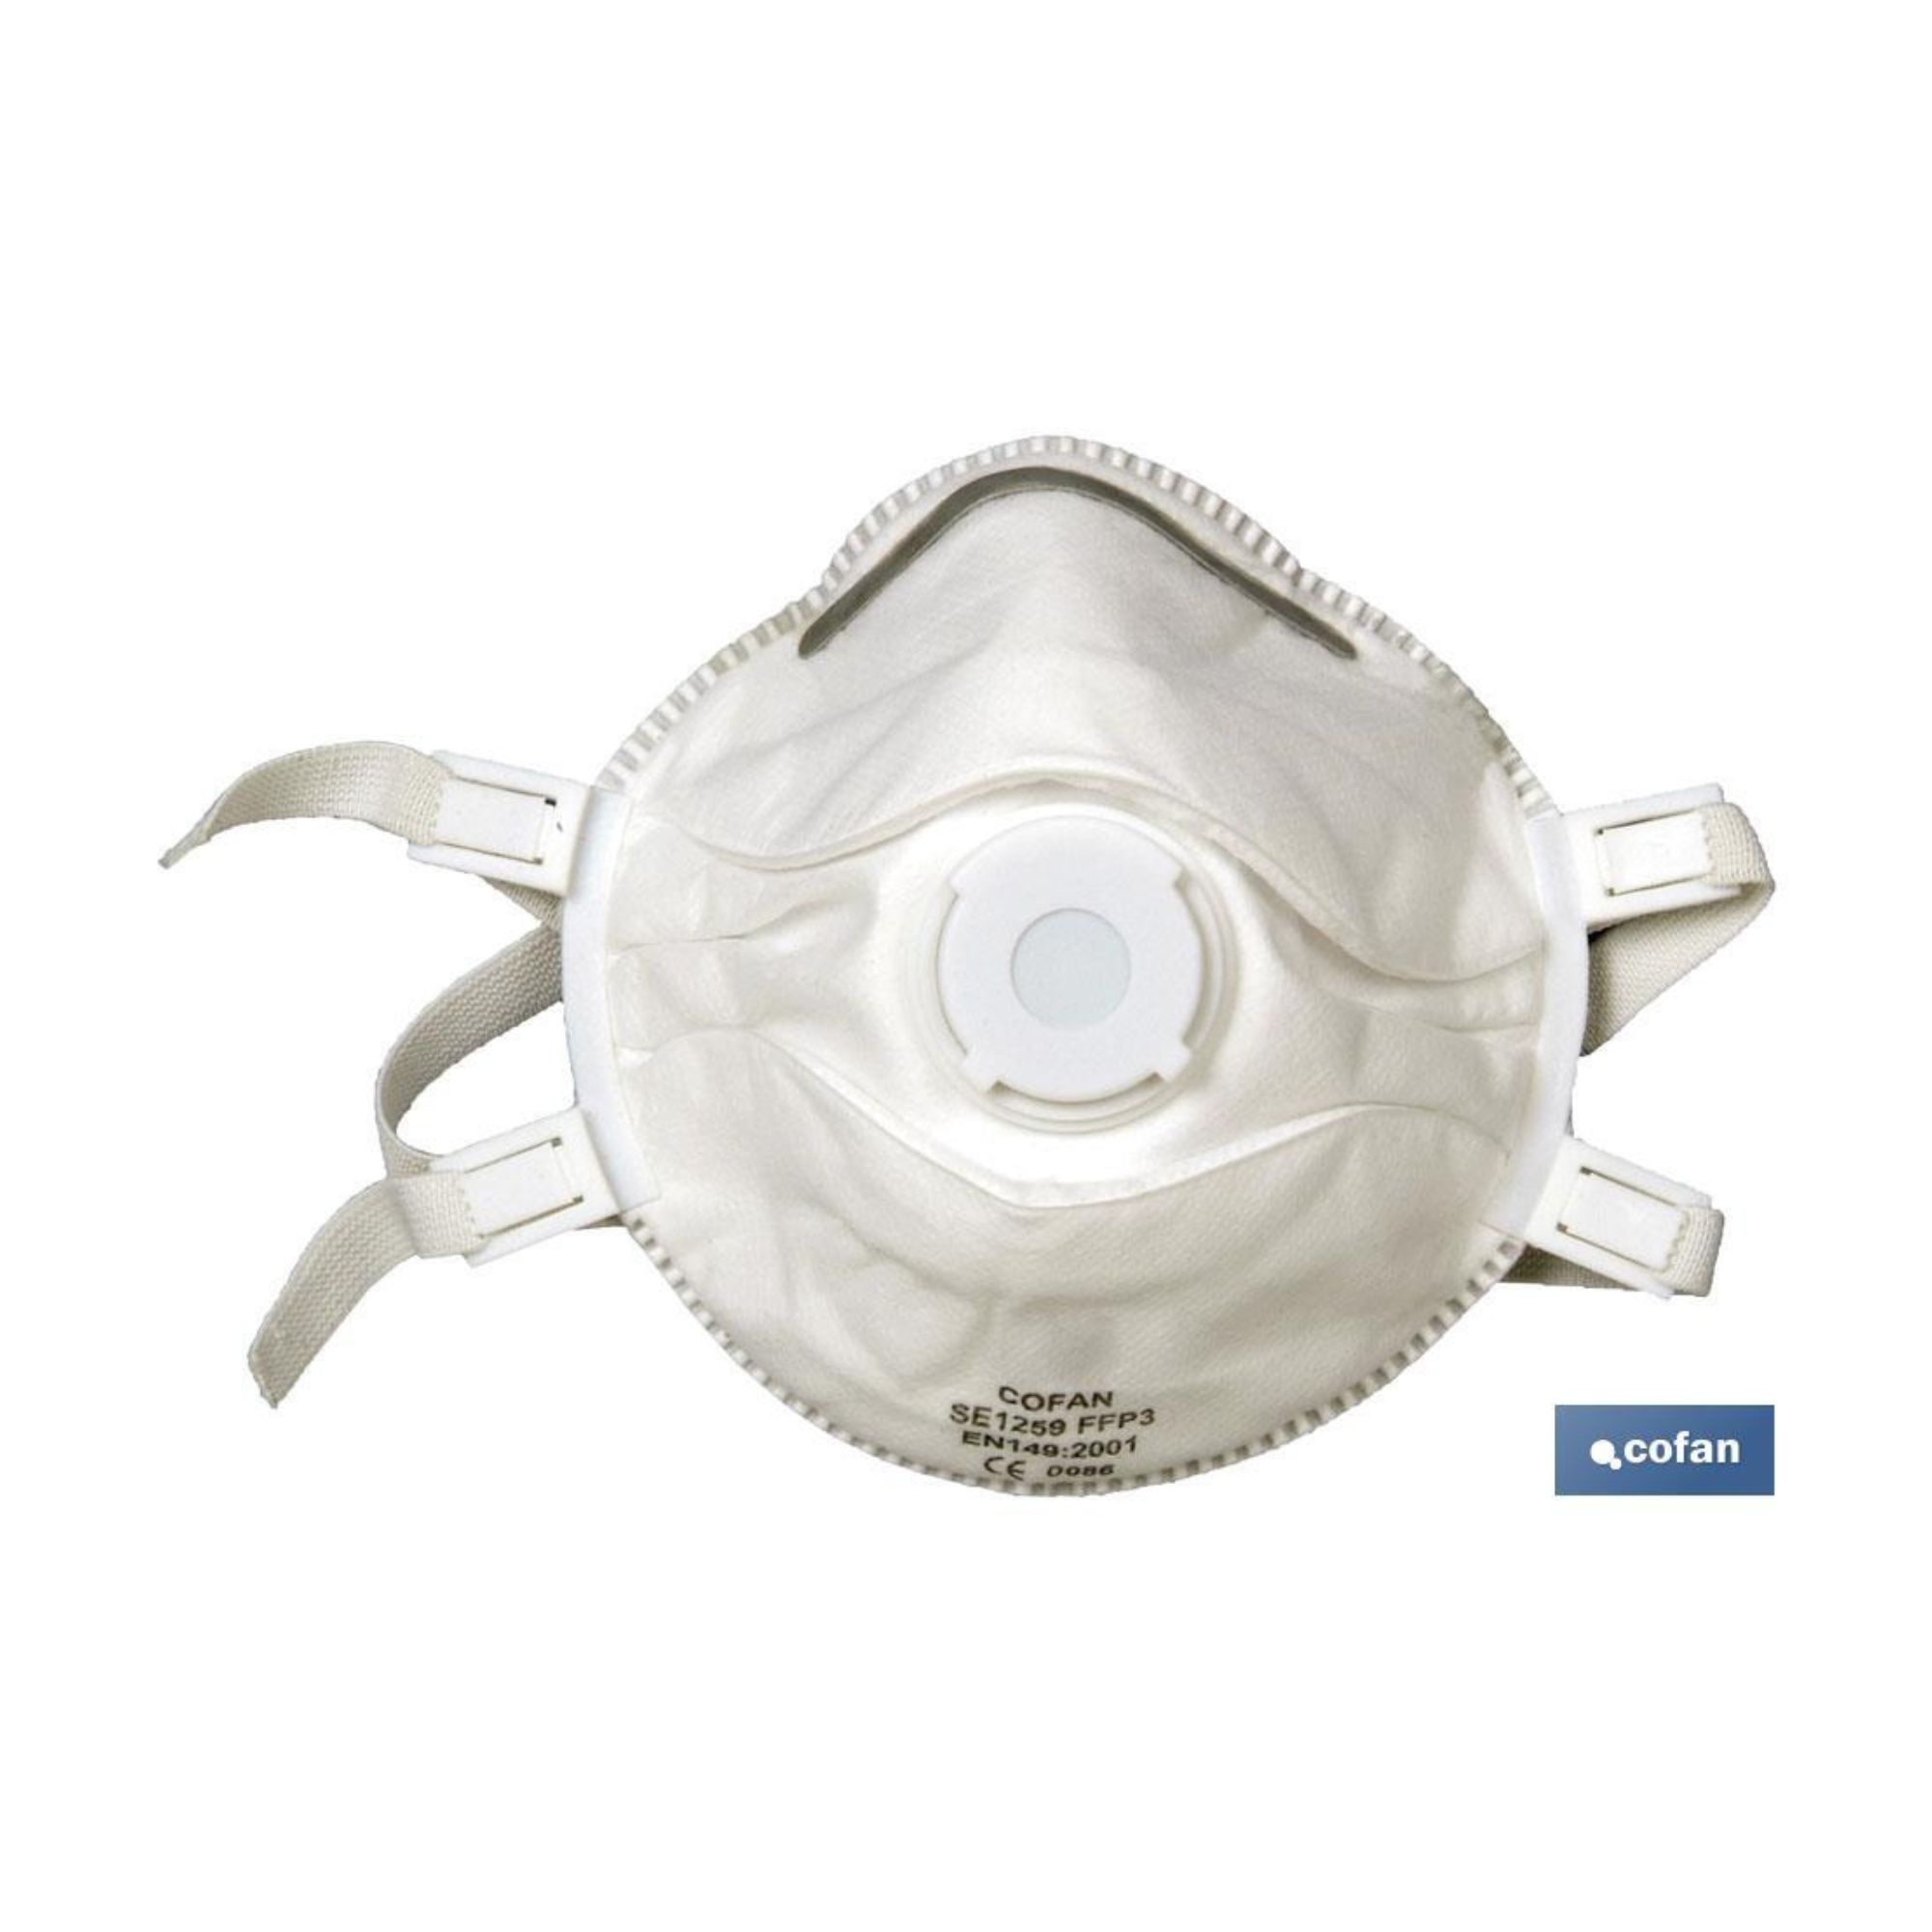 Mascara proteção c/valvula CE FFP3 Cofan